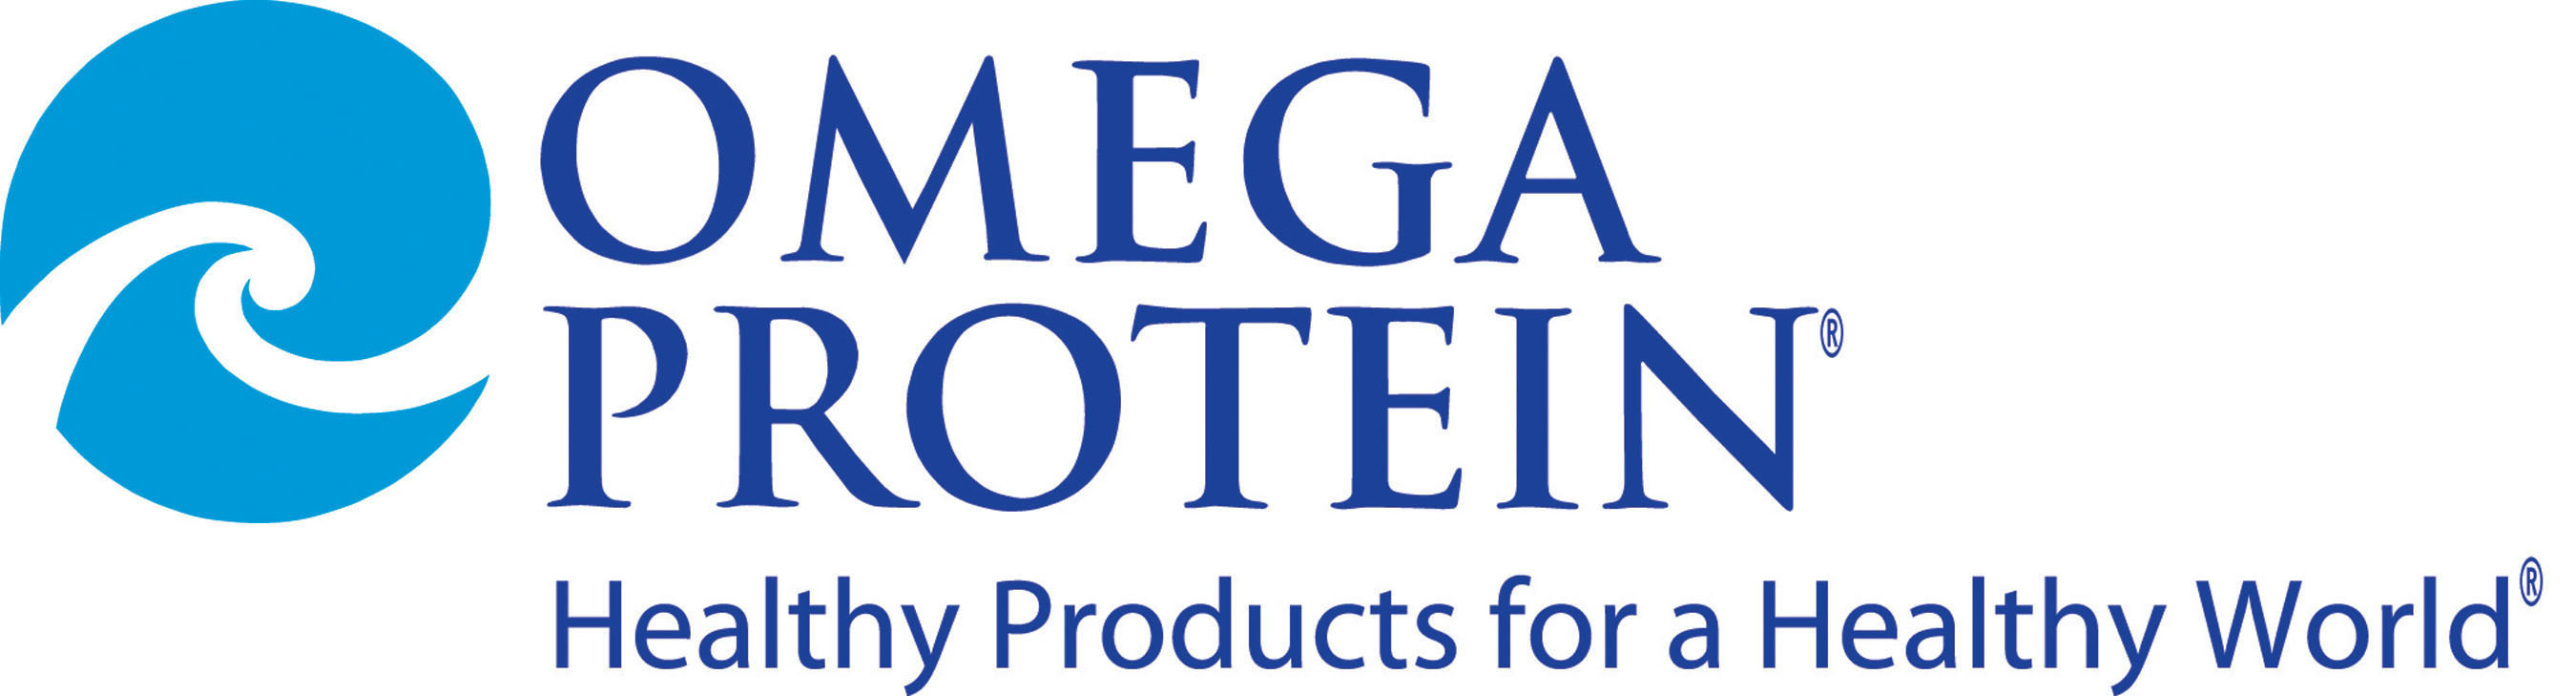 Omega Protein Corporation Logo.